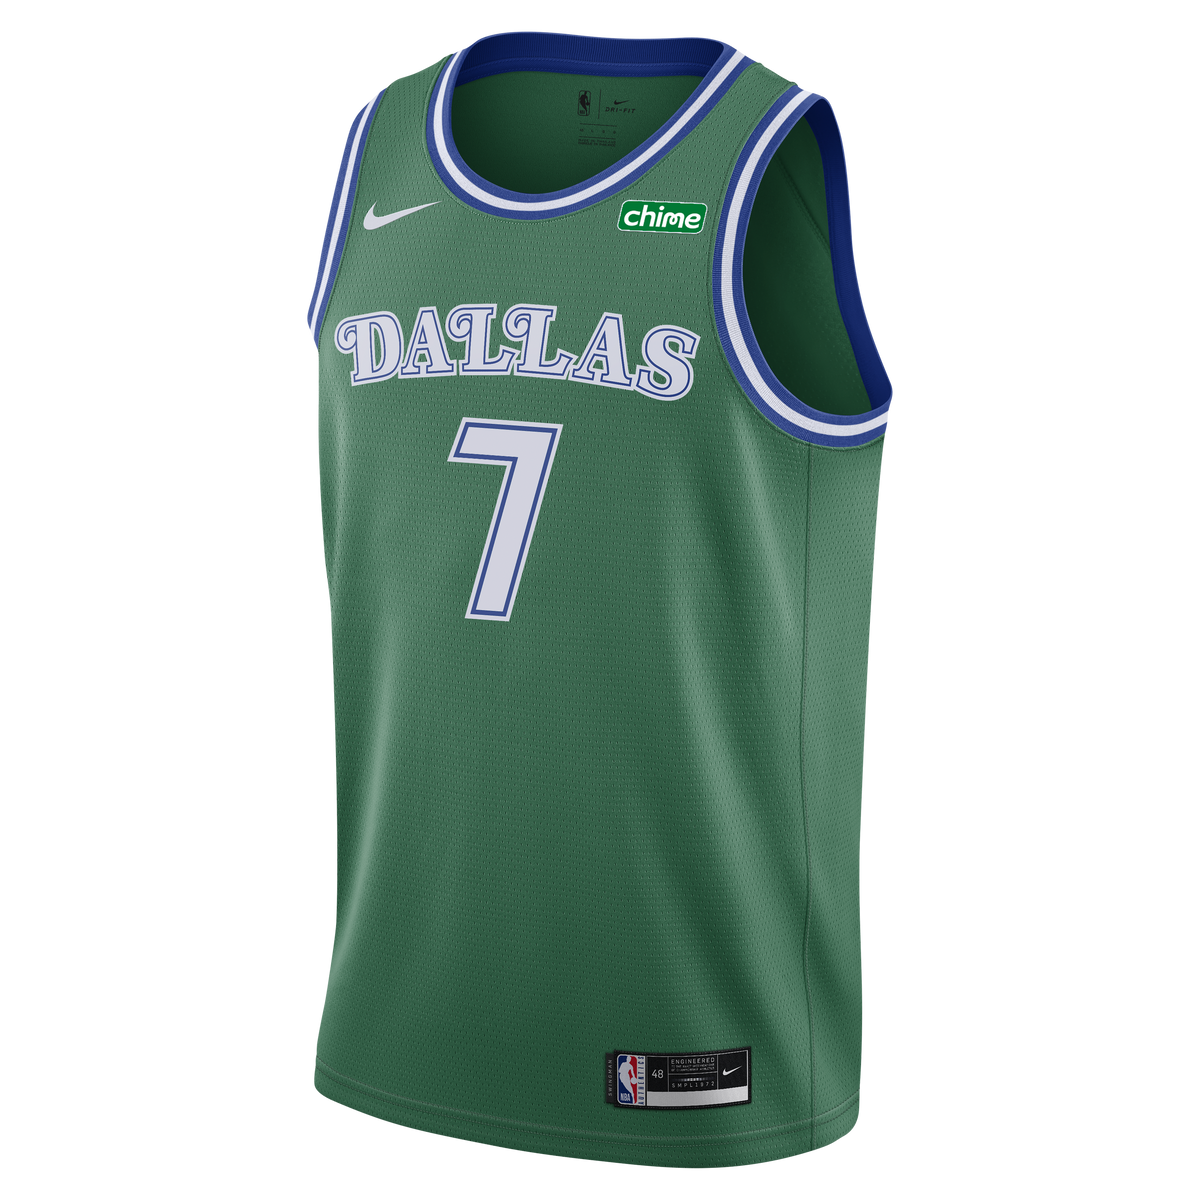 Dallas Mavericks confirm Chime jersey patch deal - SportsPro